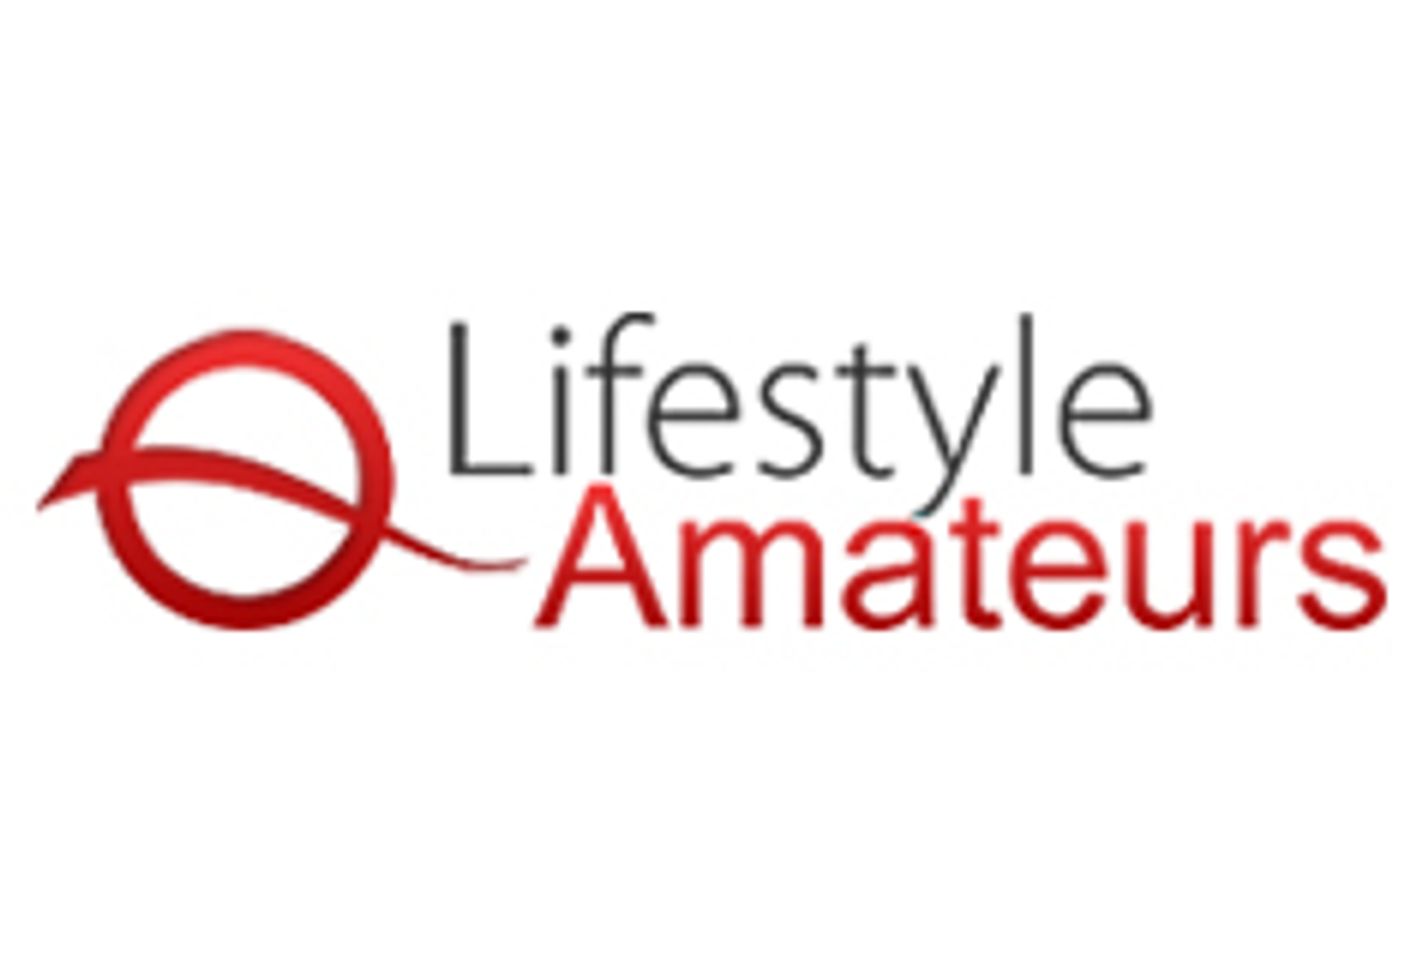 Andi Sins Named LifestyleAmateurs.com Community Manager